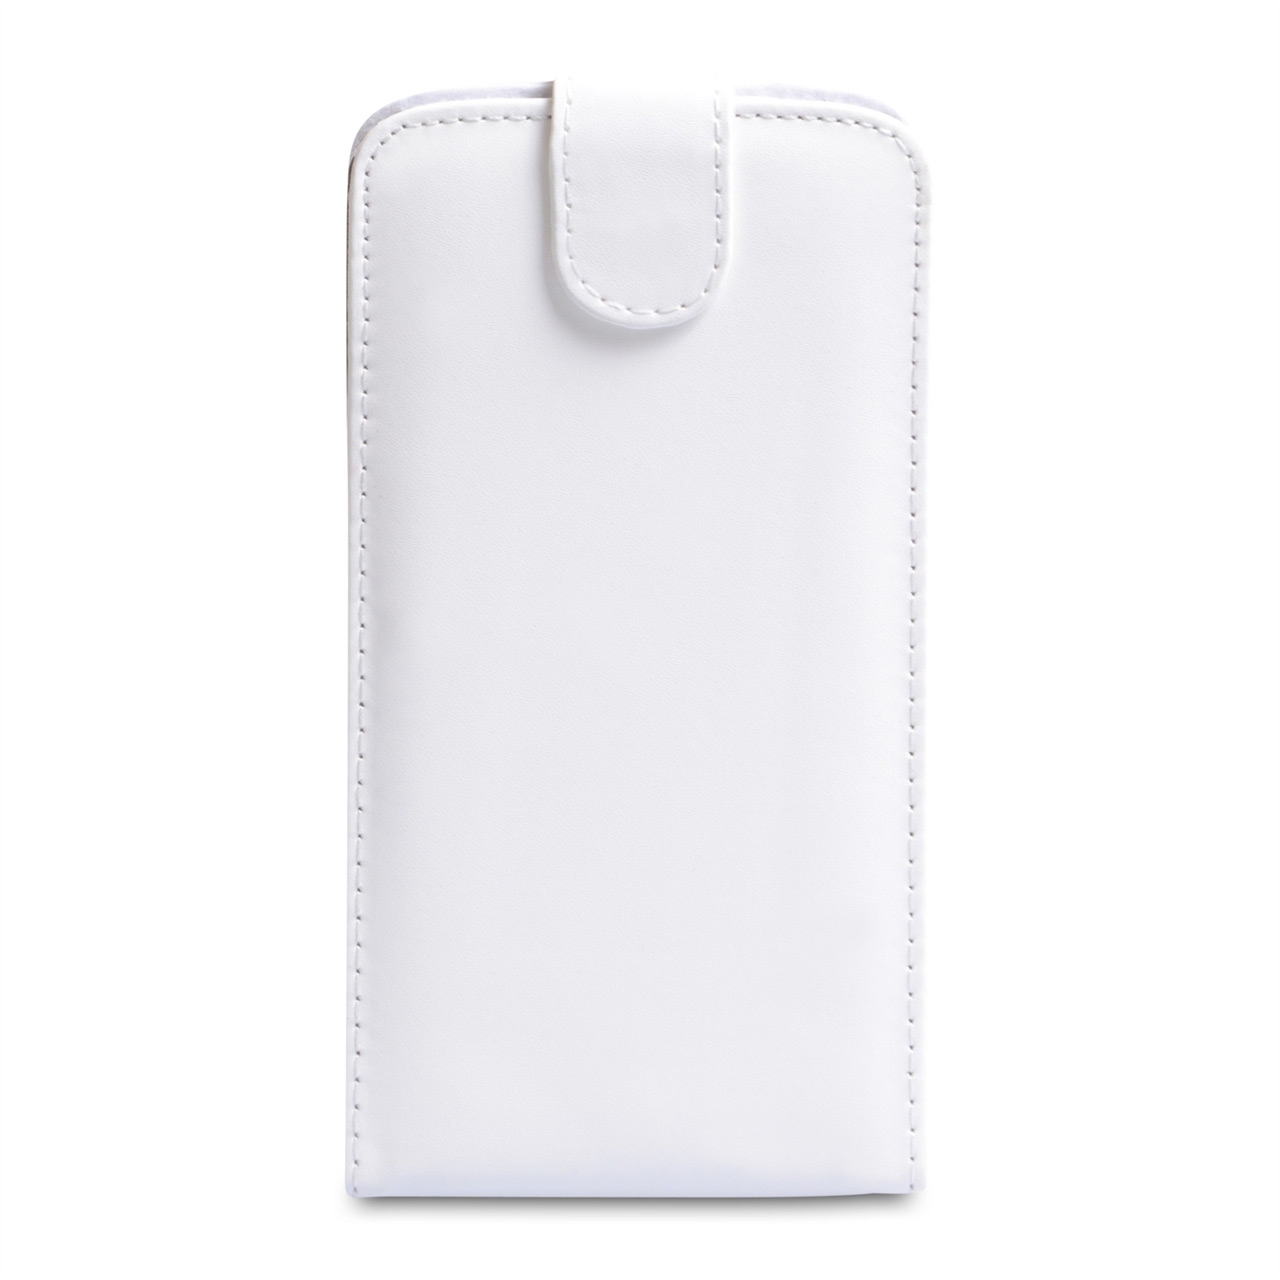 YouSave Samsung Galaxy Mega 6.3 White Leather Effect Flip Case